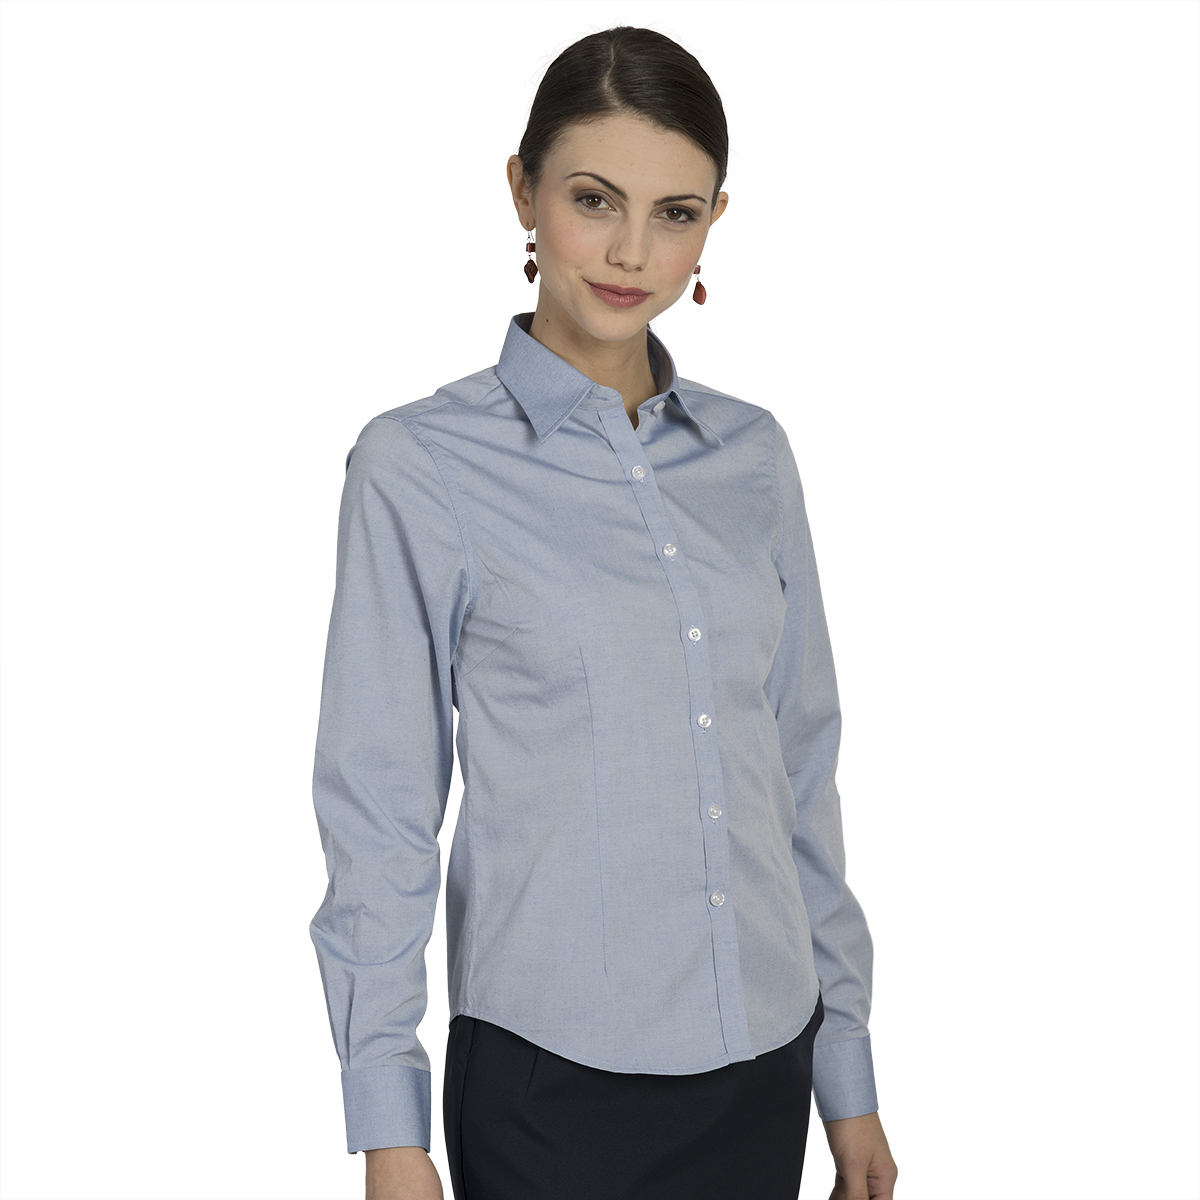 Women's Pocketless Pinpoint Oxford Shirt | Executive Apparel